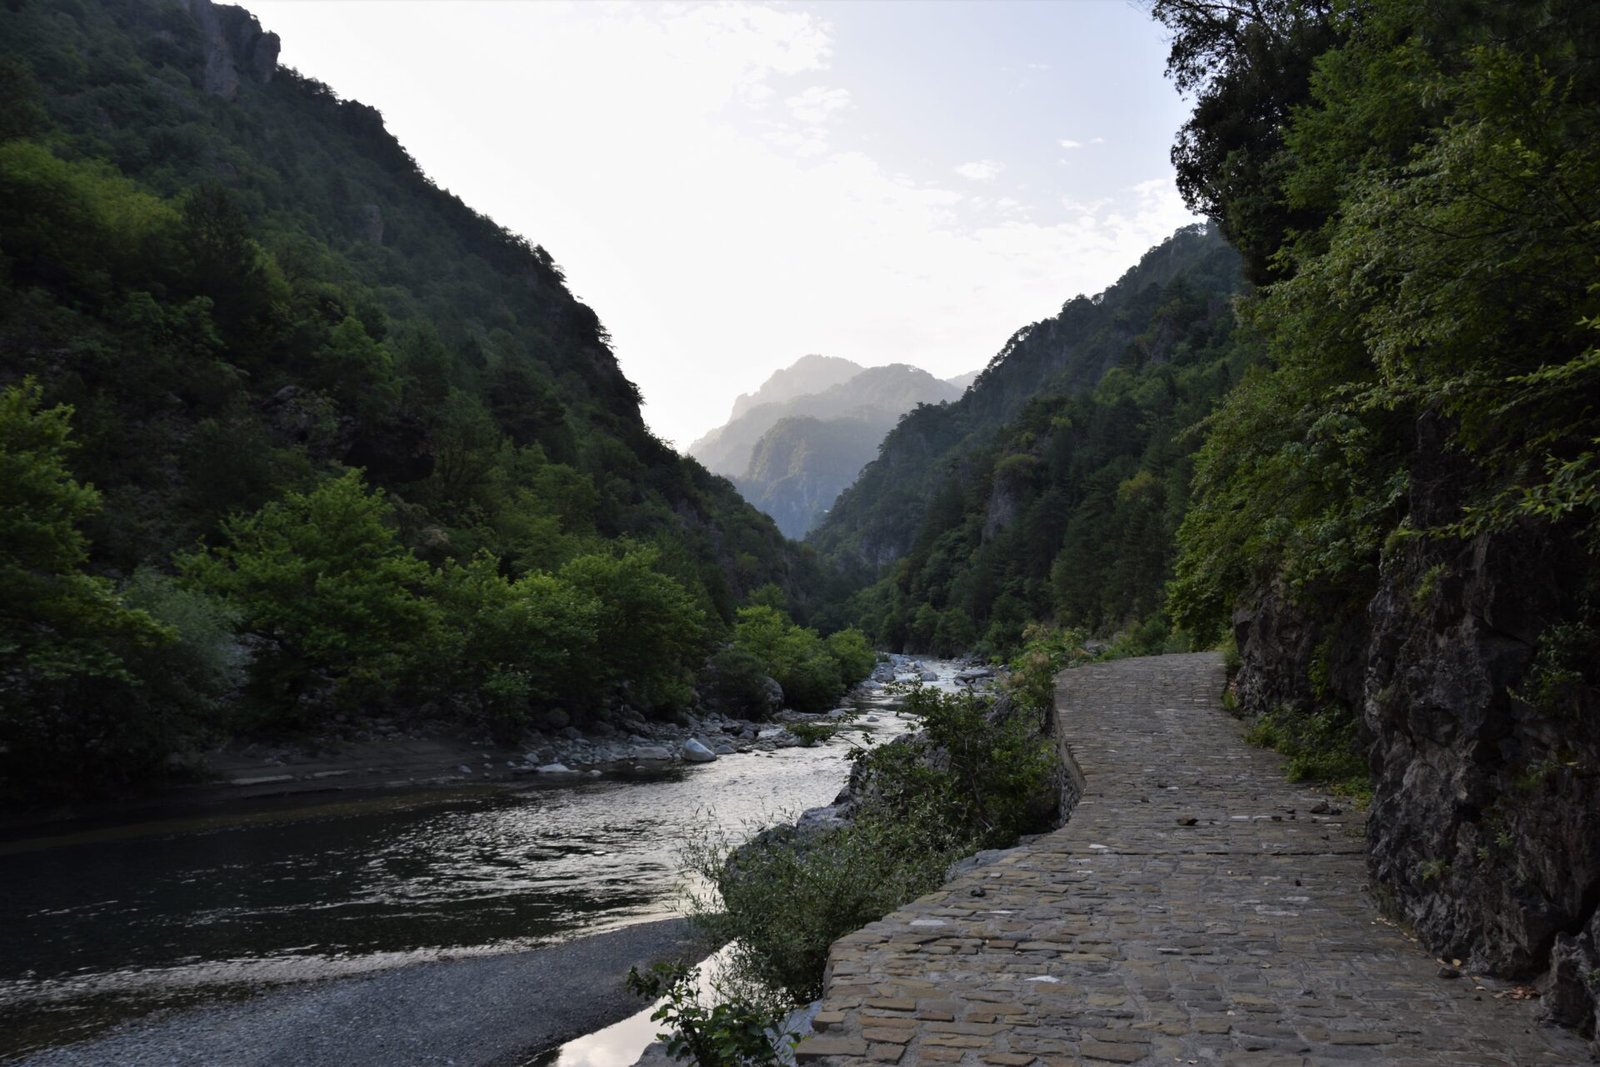 a stone path runs along a stream in a verdant canyon